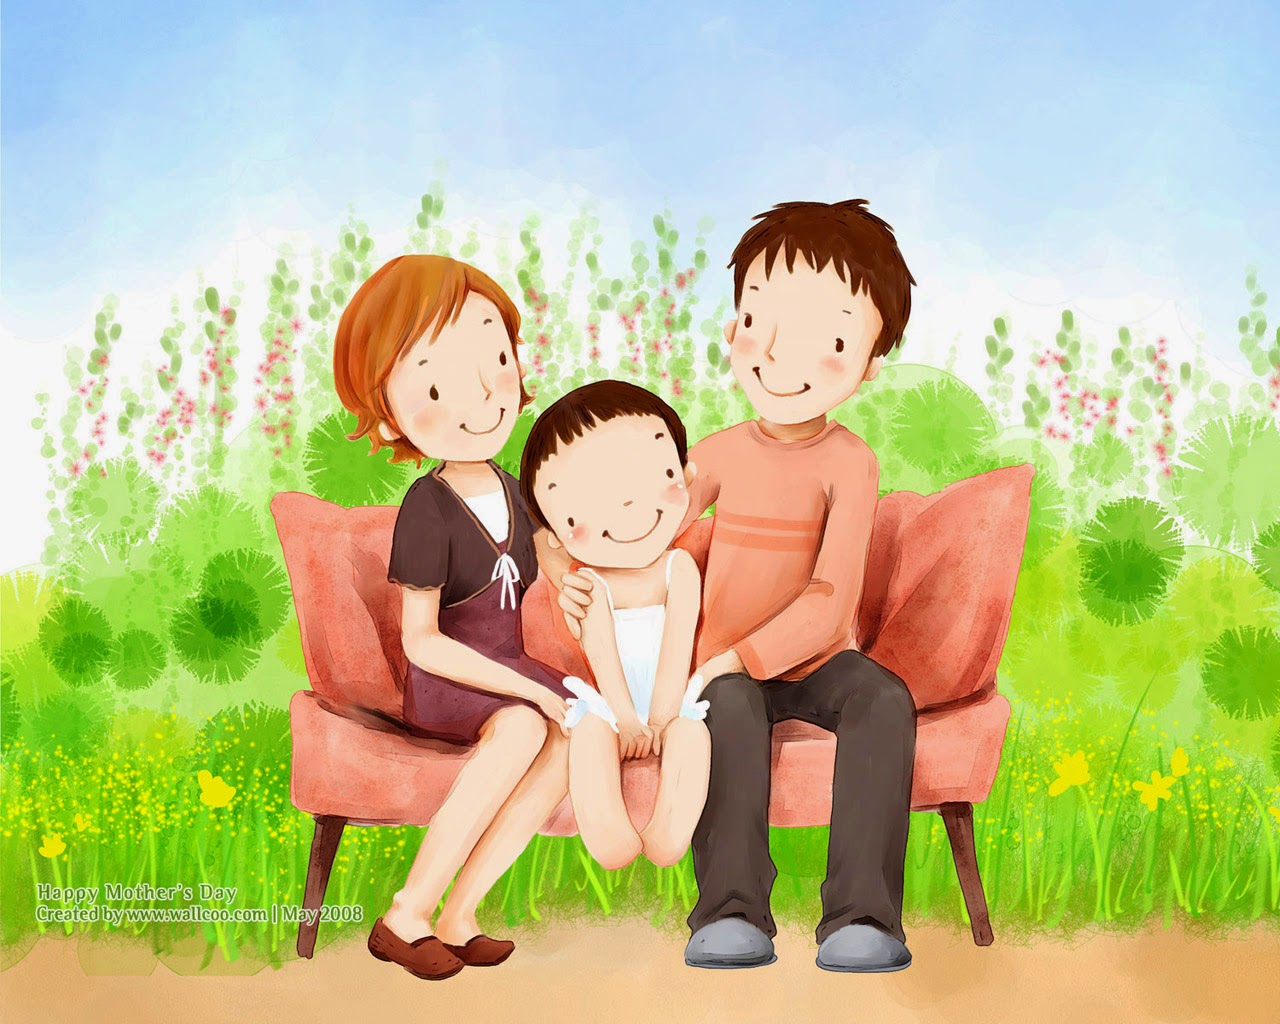 http://3.bp.blogspot.com/-hp3aW5nVMDg/VNA0p8HCLkI/AAAAAAAAAY4/C3T_Ytr290M/s1600/Lovely_illustration_of_Happy_family_on_sofa_wallcoo.com.jpg